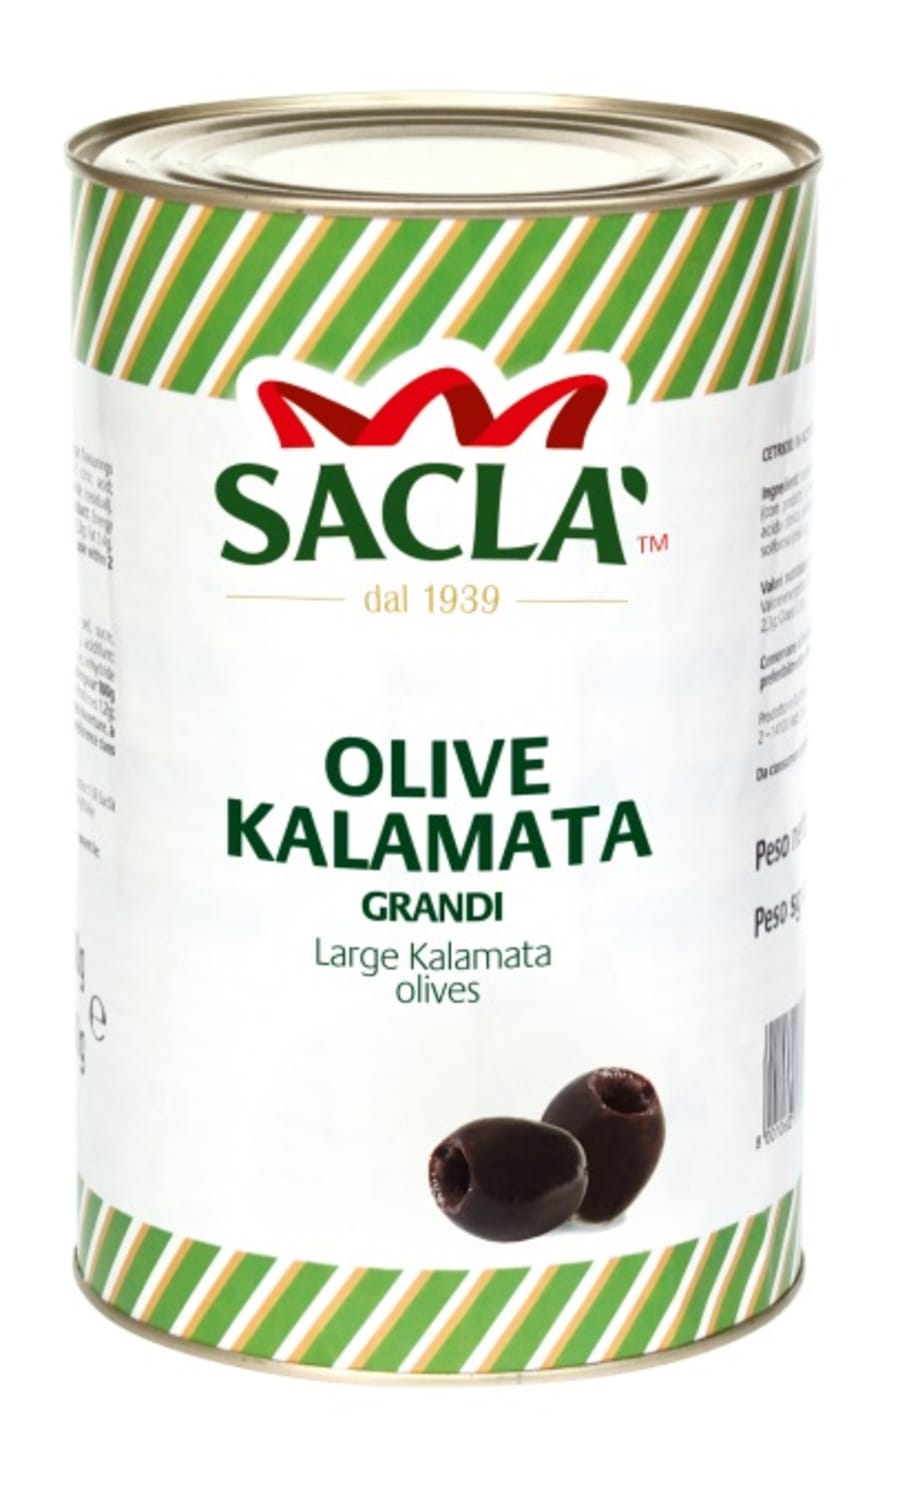 Sacla Kalamata ólífur 4,1kg